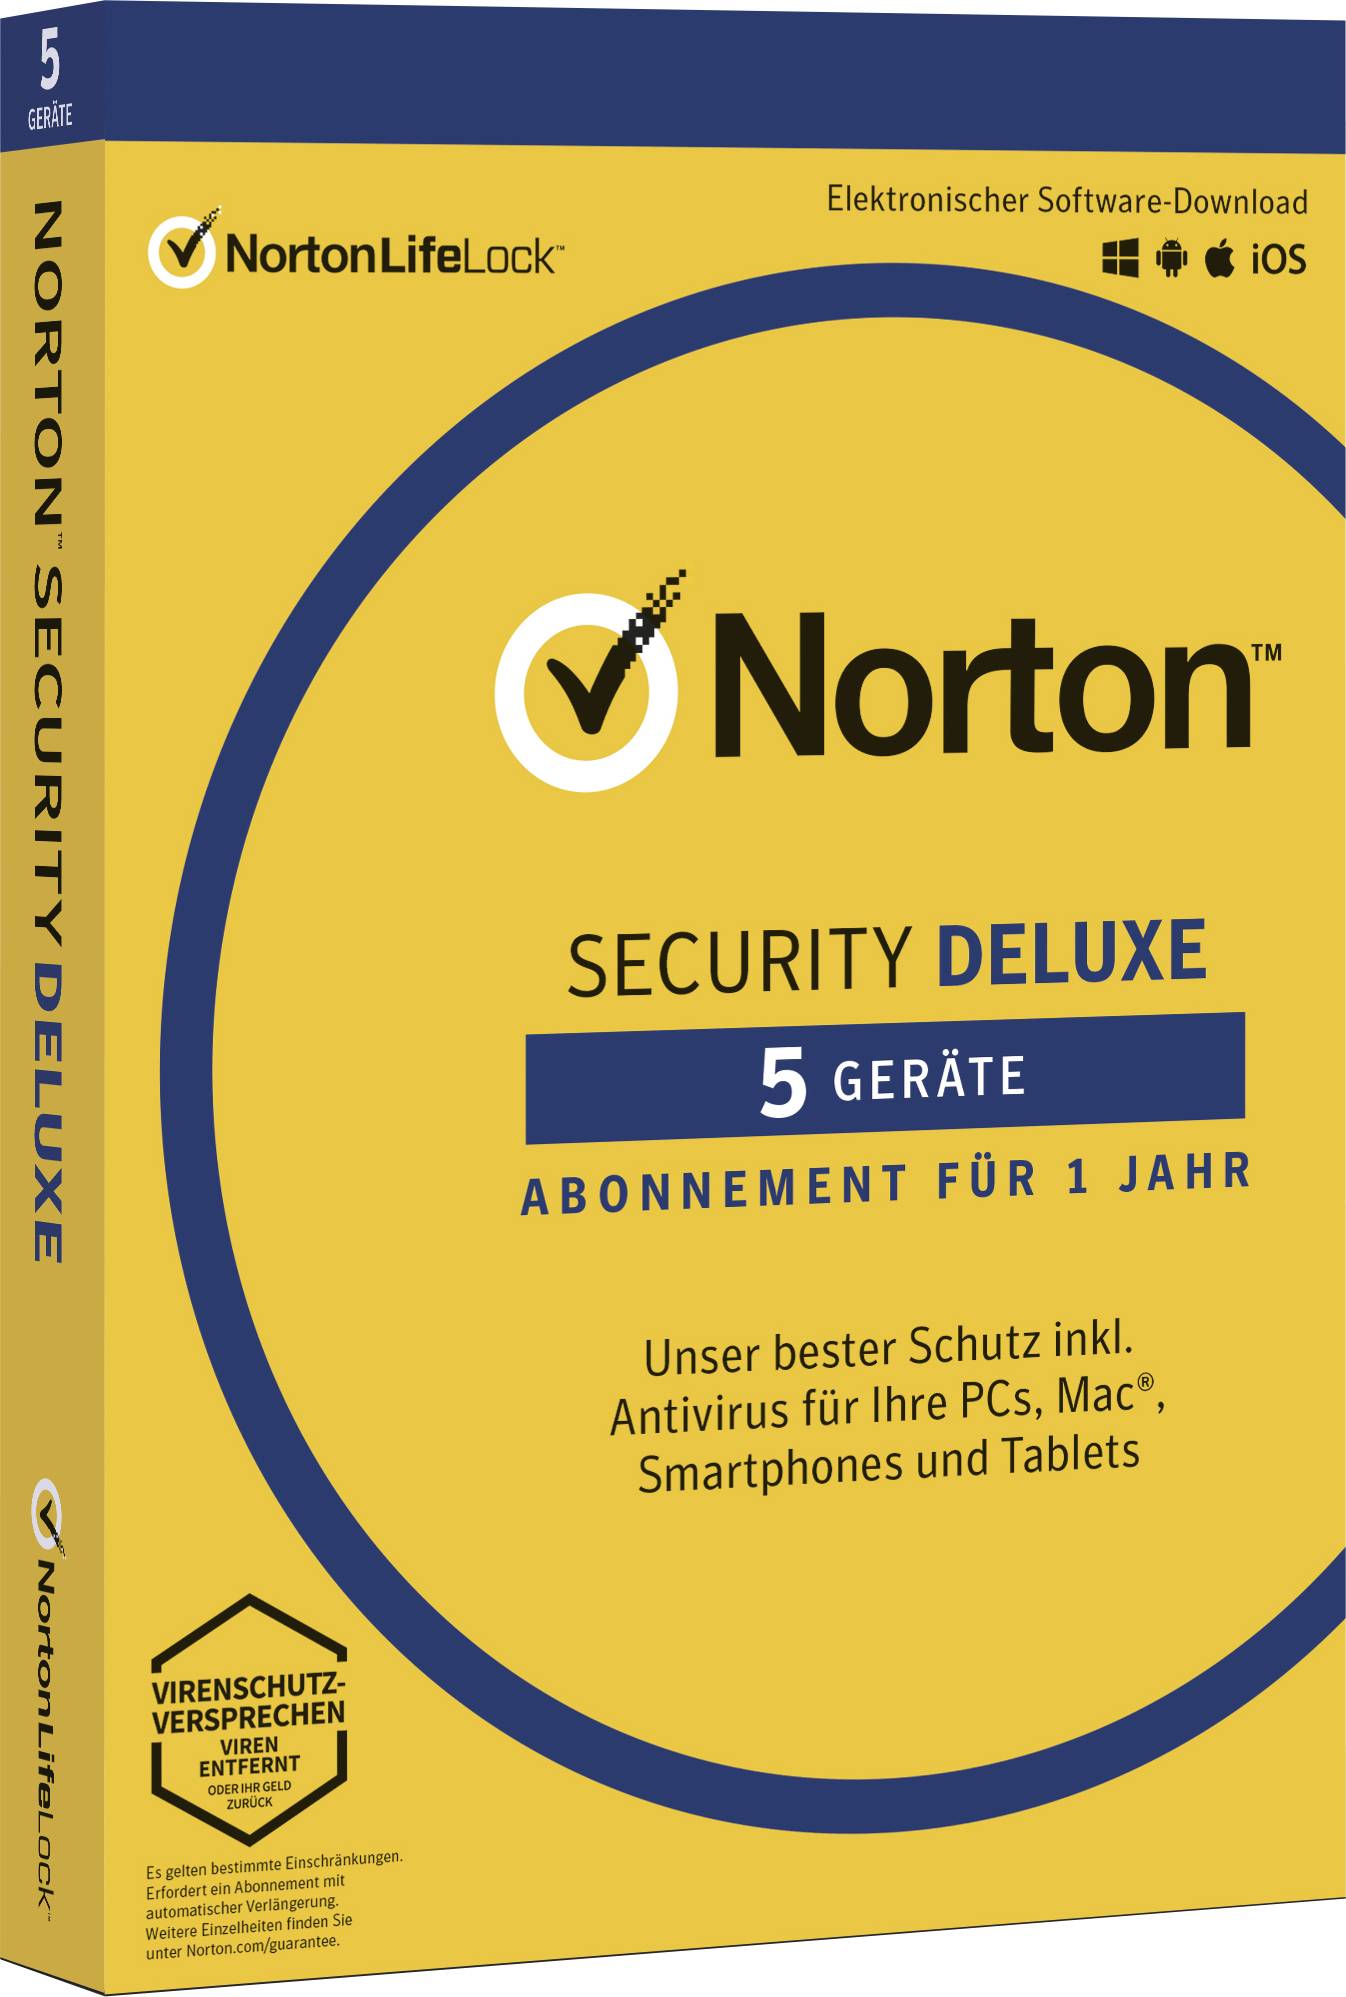 norton internet security for mac os x lion